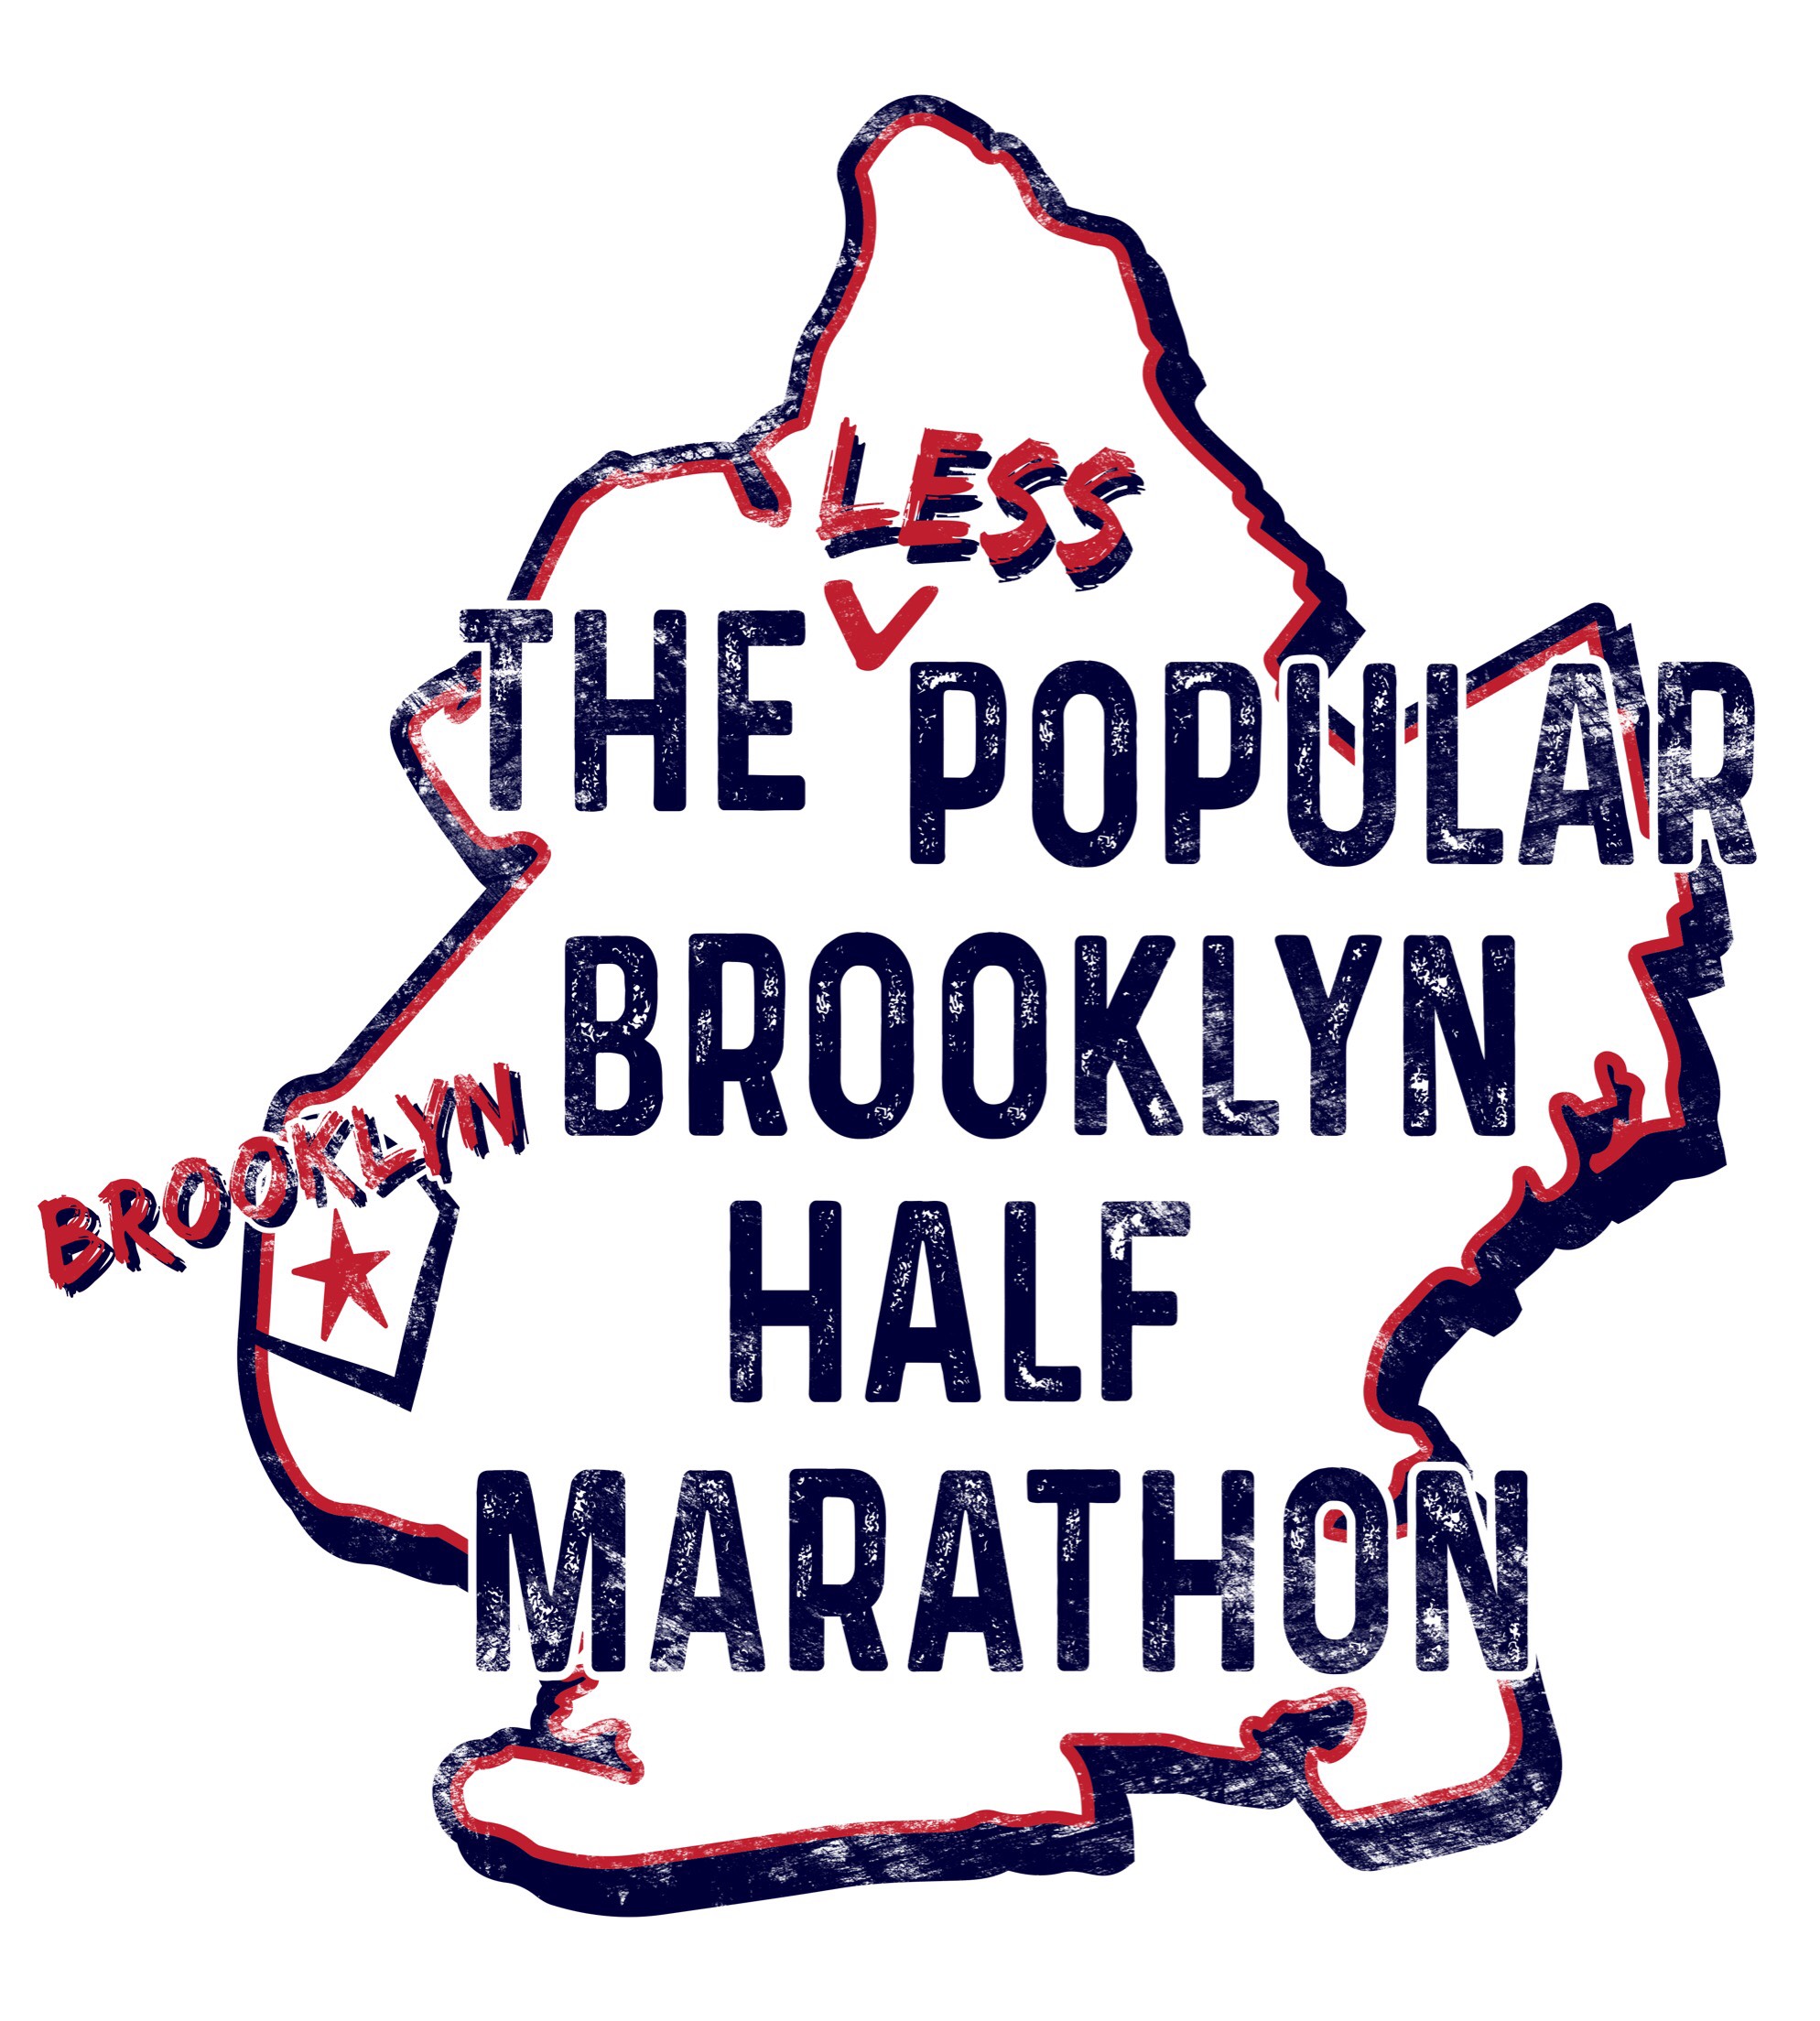 The Less Popular Brooklyn Half Marathon